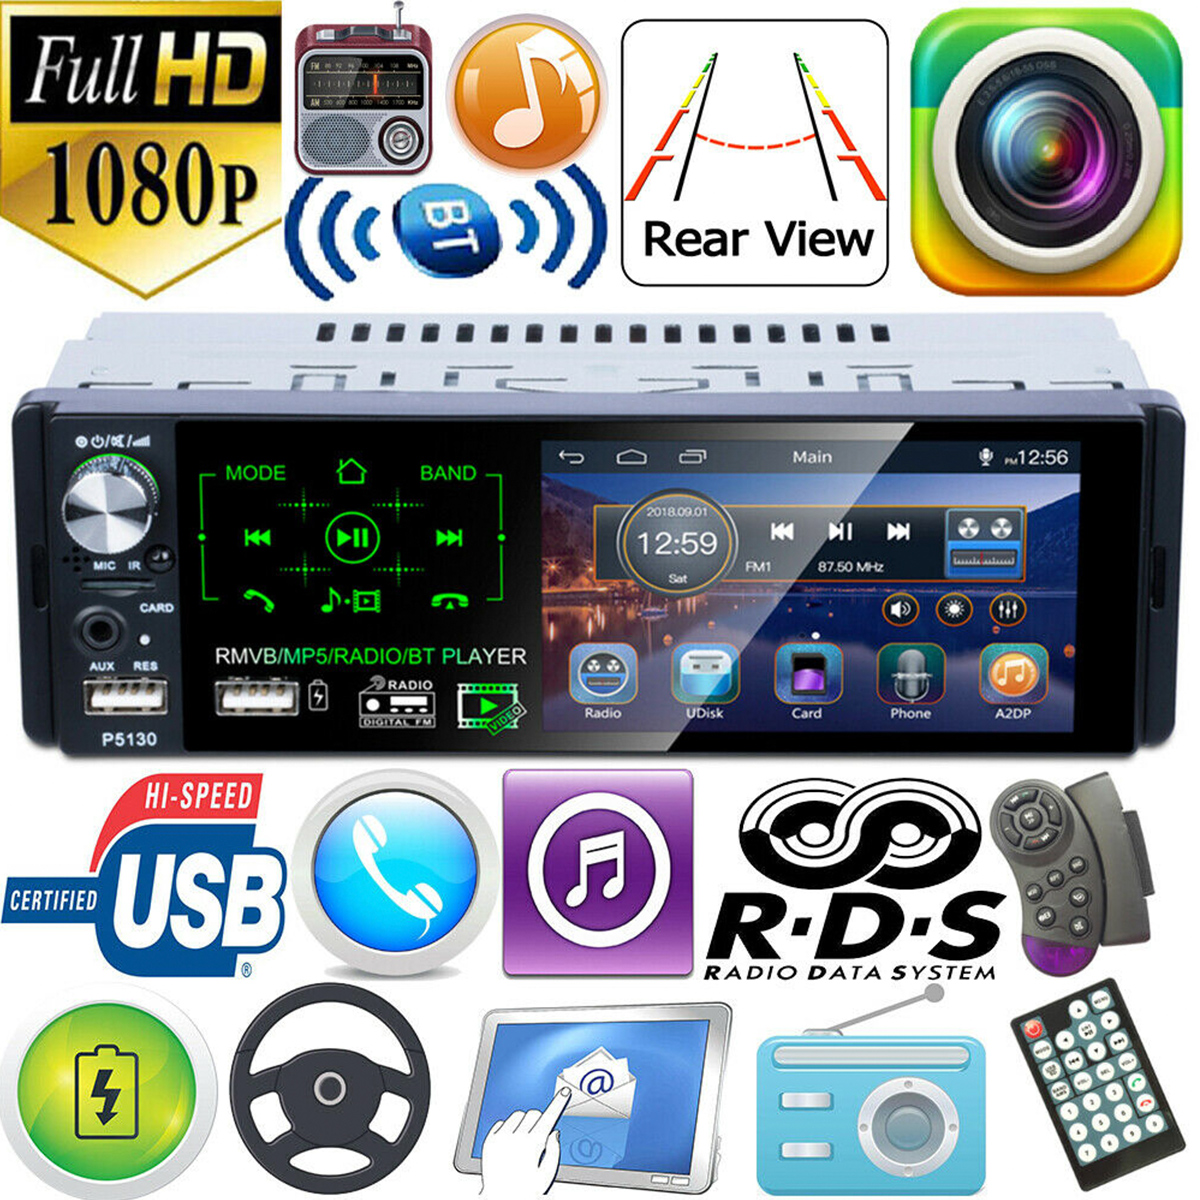 LSLYA 4.1inch HD Single DIN Bluetooth Car Stereo Audio Radio FM Receiver 1080P Video Player MP3/USB/SD/TF/AUX/FM 